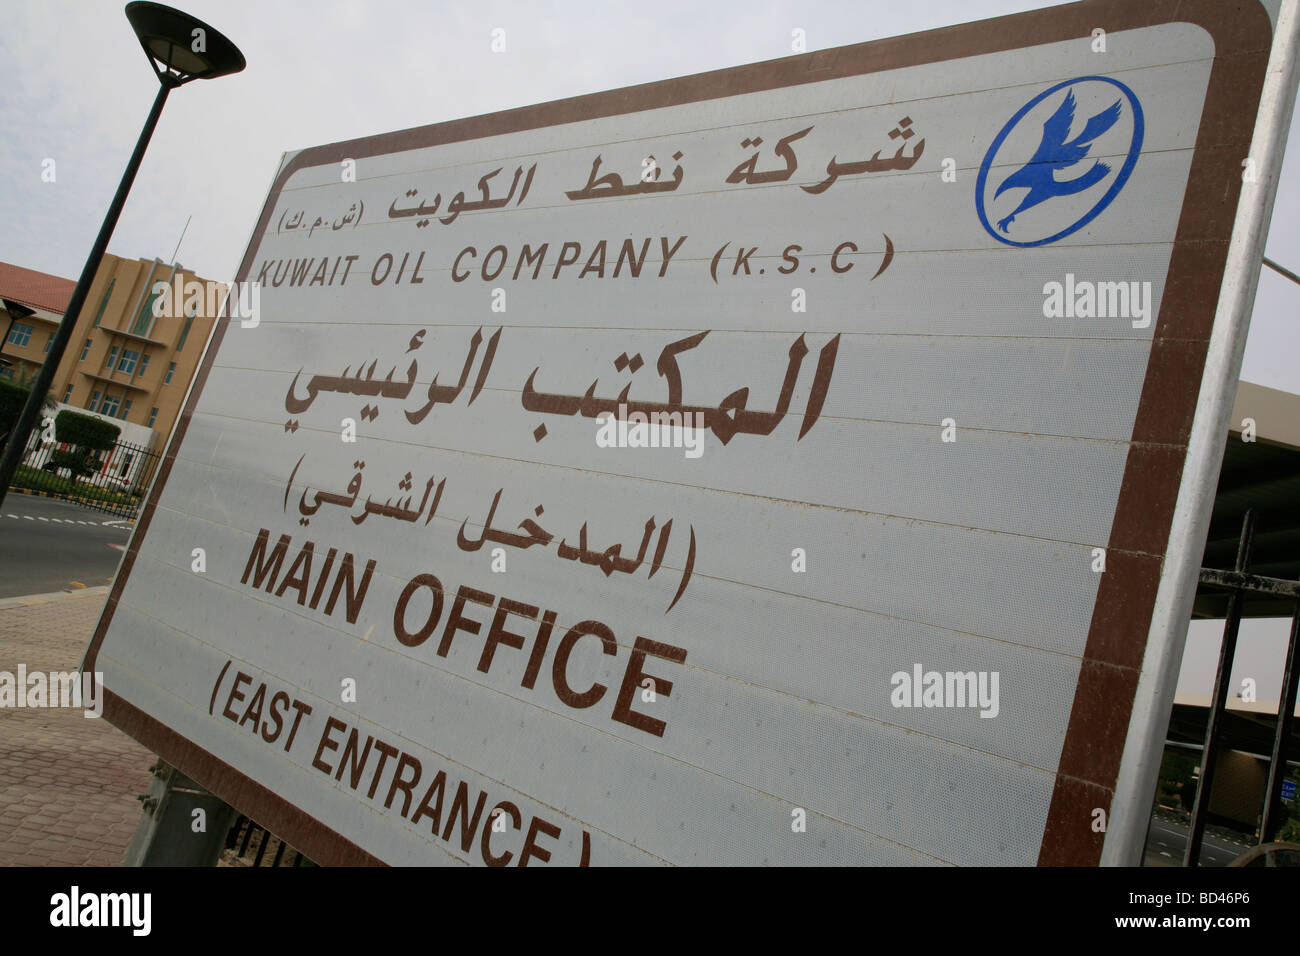 KOC Kuwait Oil Company HeadQuarters Building Sign Stock Photo